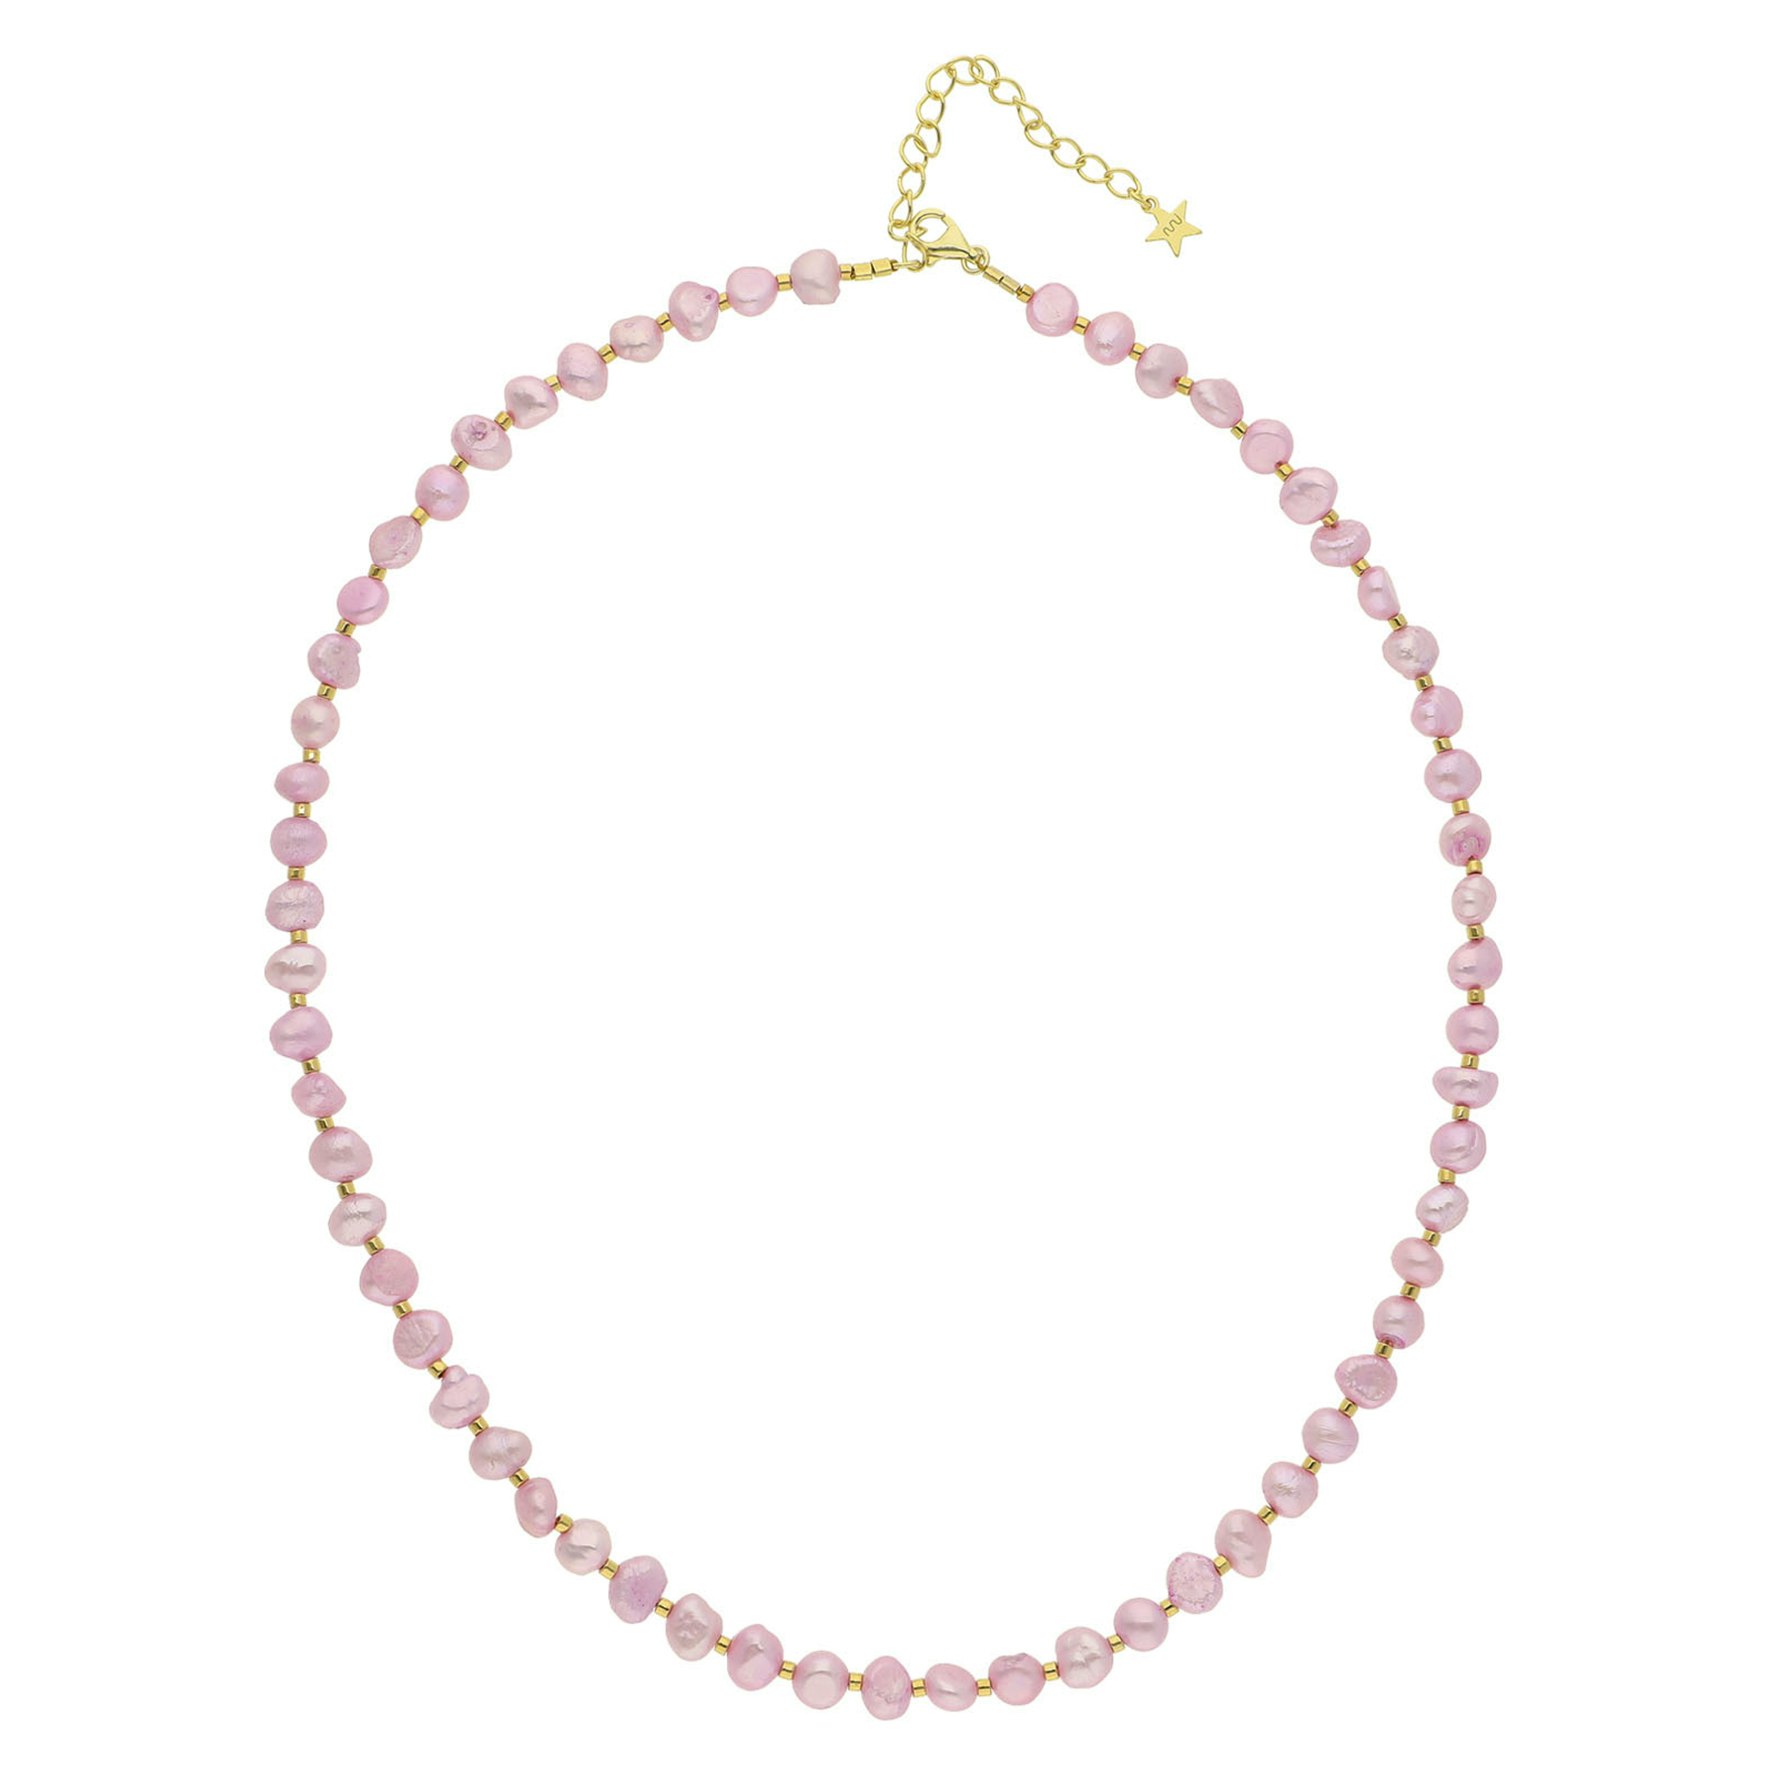 Ditte Light Pink Necklace fra Nuni Copenhagen i Forgyldt-Sølv Sterling 925